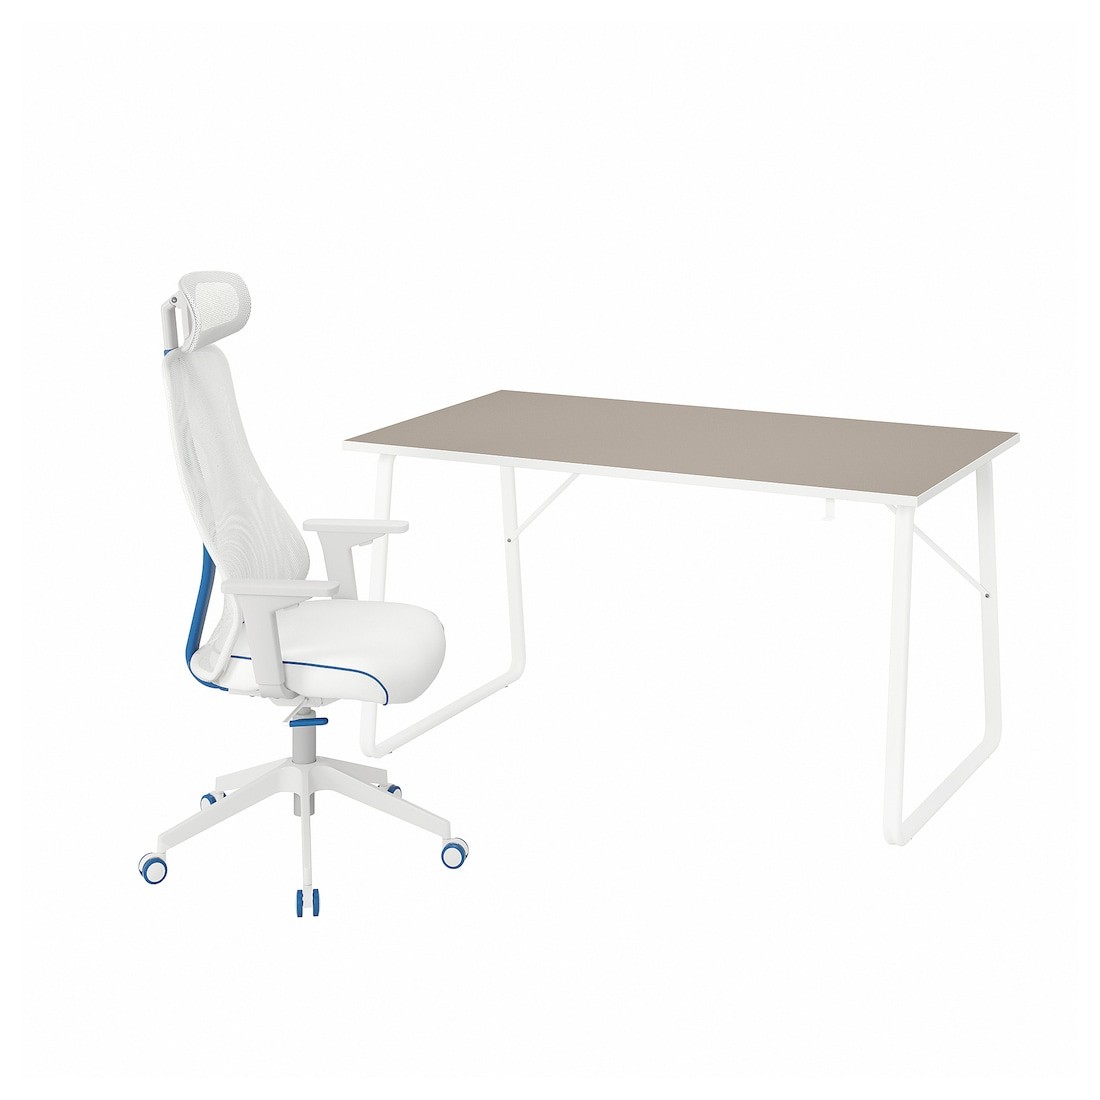 HUVUDSPELARE / MATCHSPEL Геймерский стол и стул, бежевый / белый